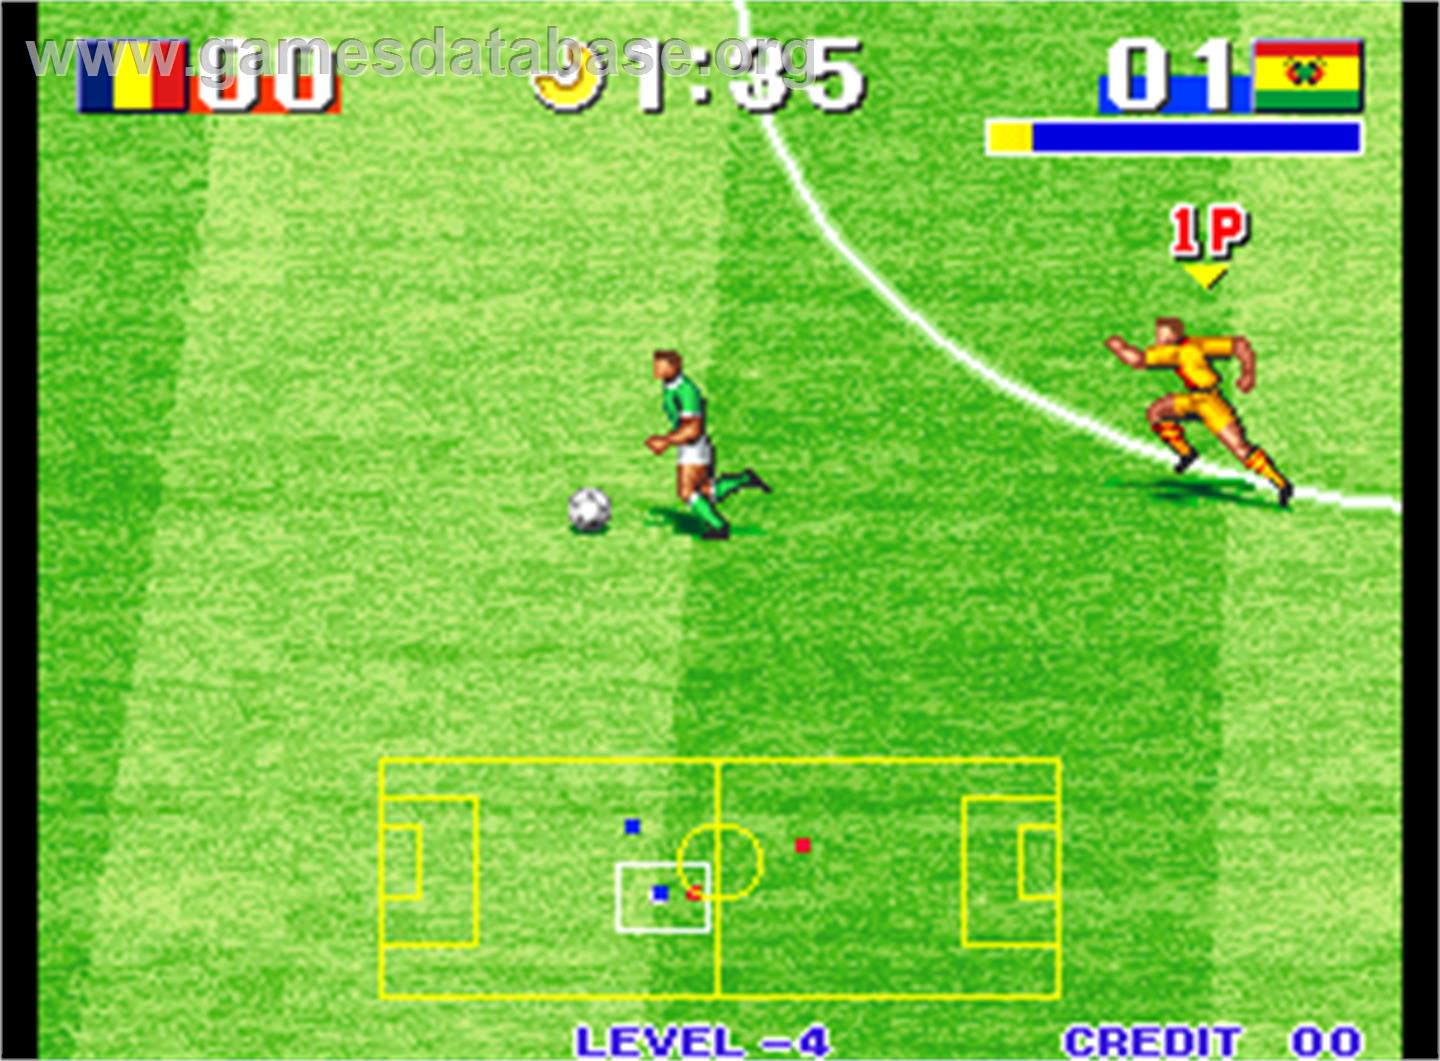 Goal! Goal! Goal! - Arcade - Artwork - In Game